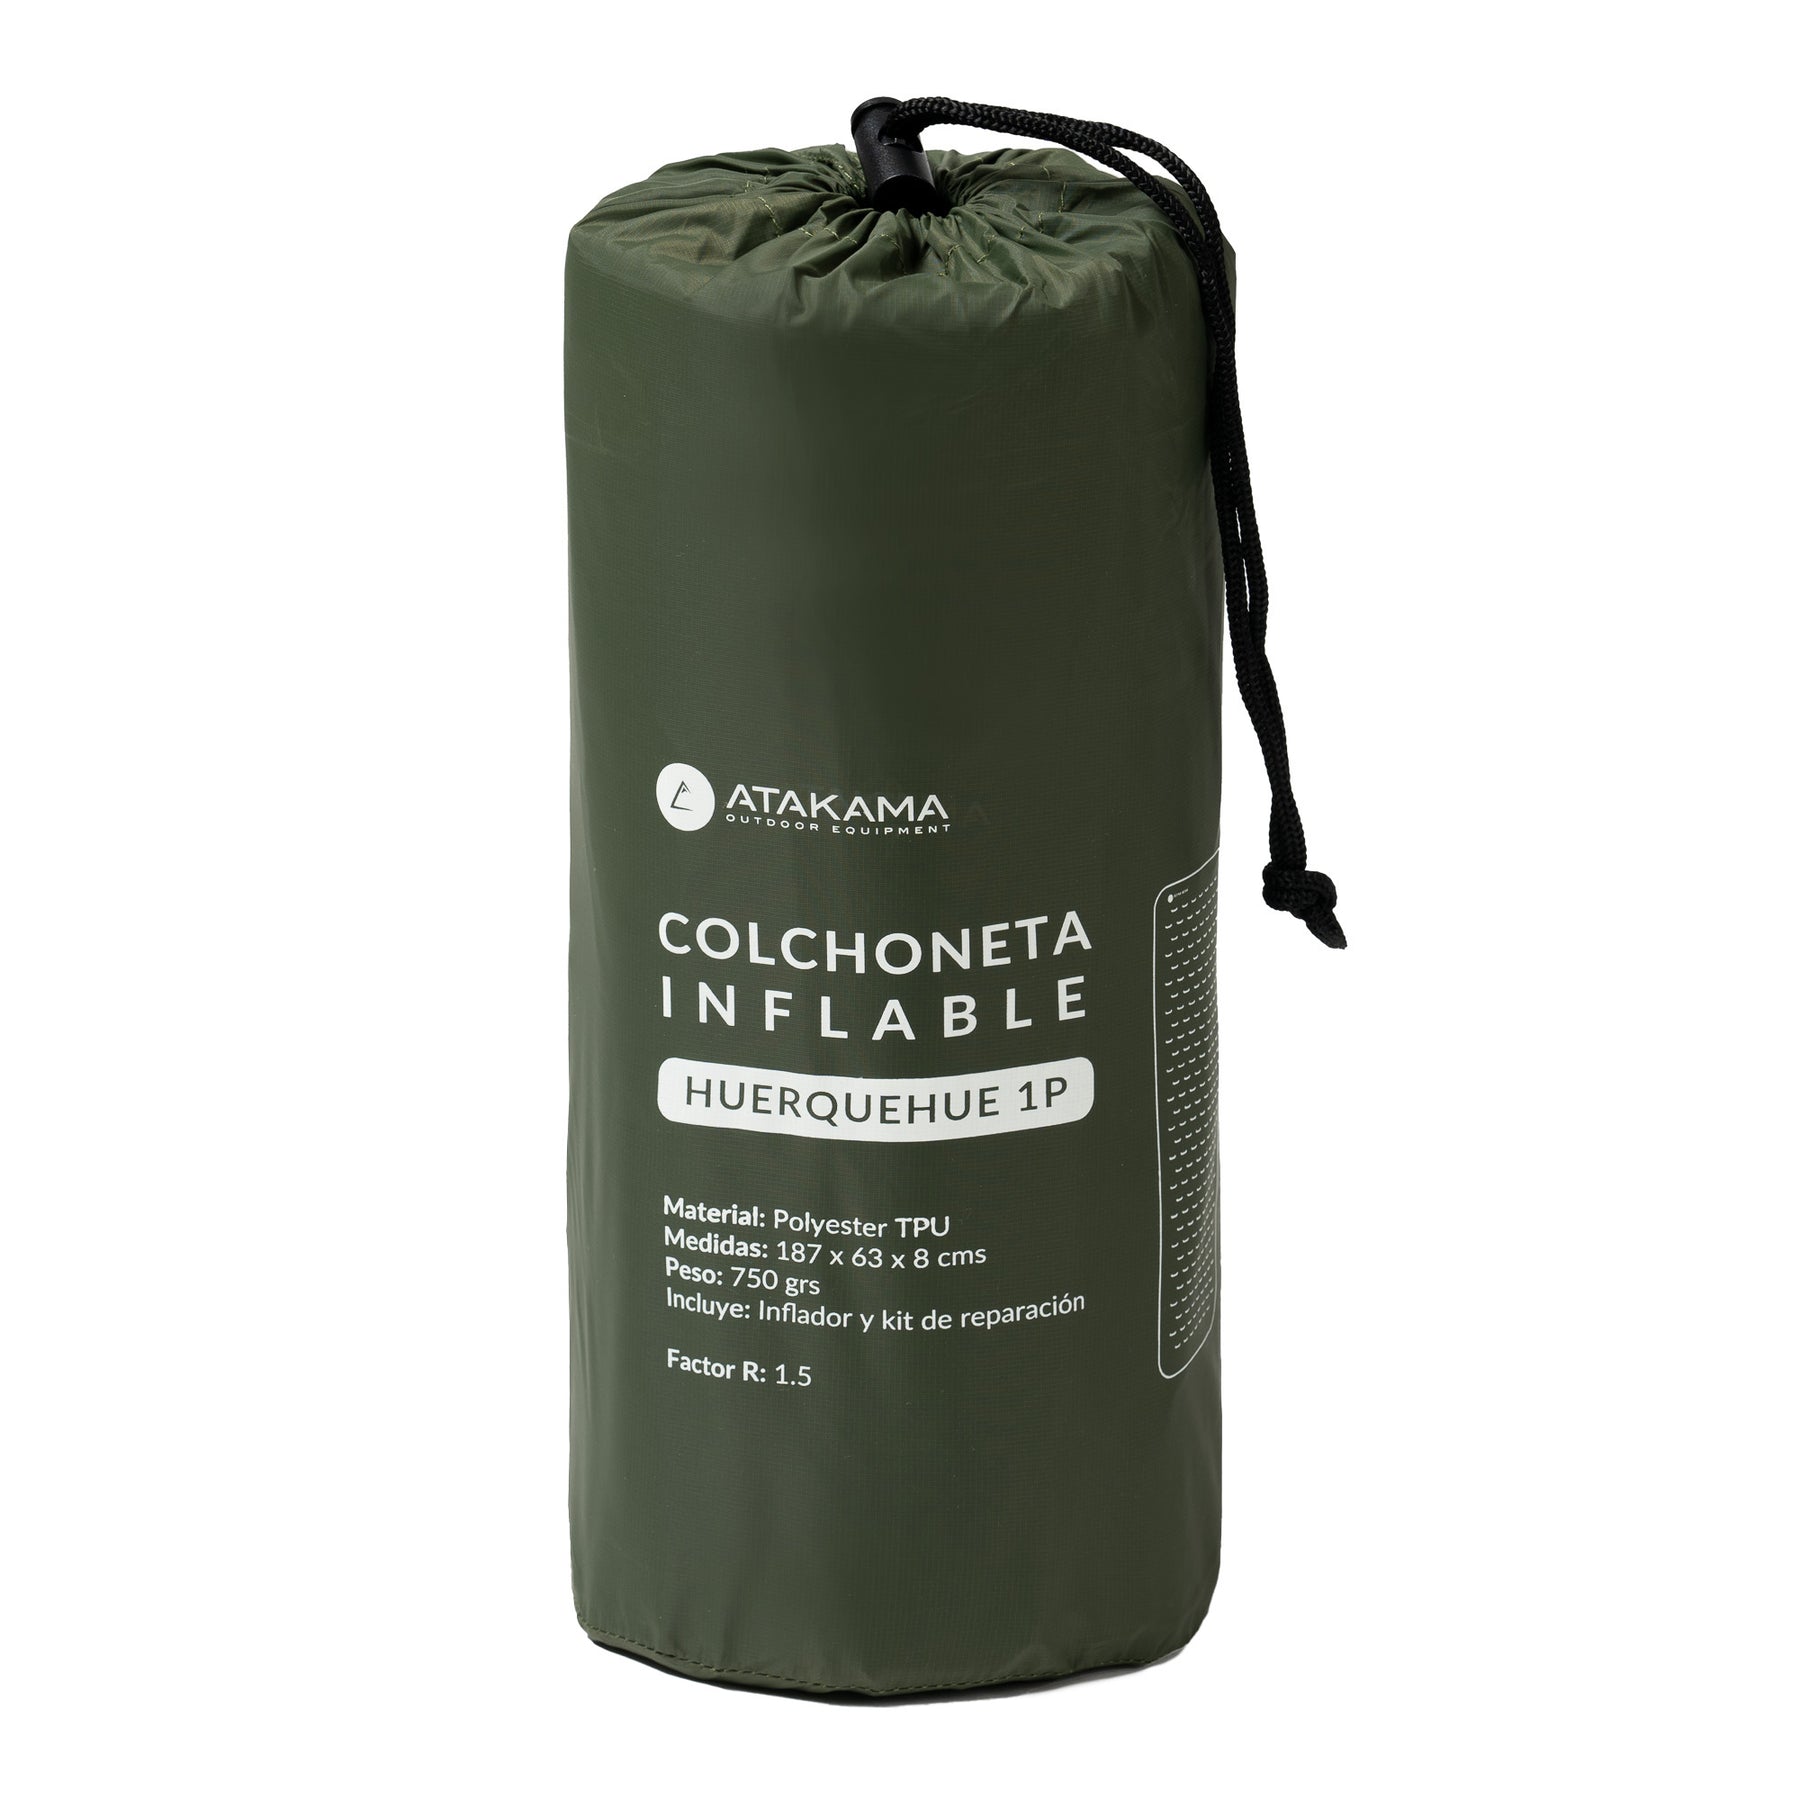 Colchoneta inflable trekking/camping Huerquehue